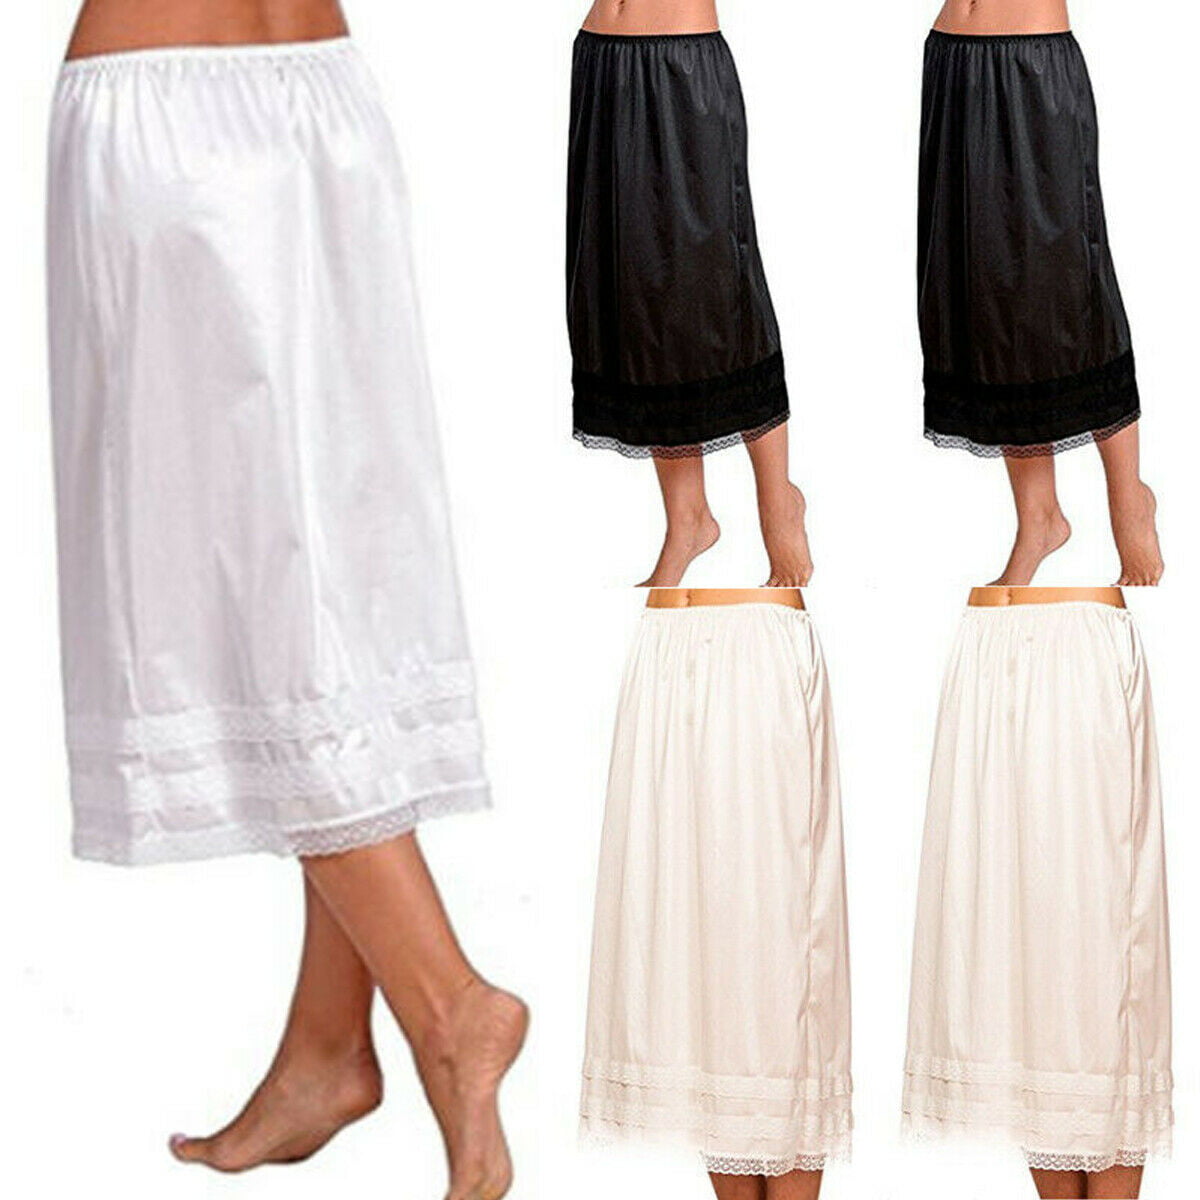 Womens Half slip Ladies Waist slip Lace Petticoat Under dress Skirt Plus size 